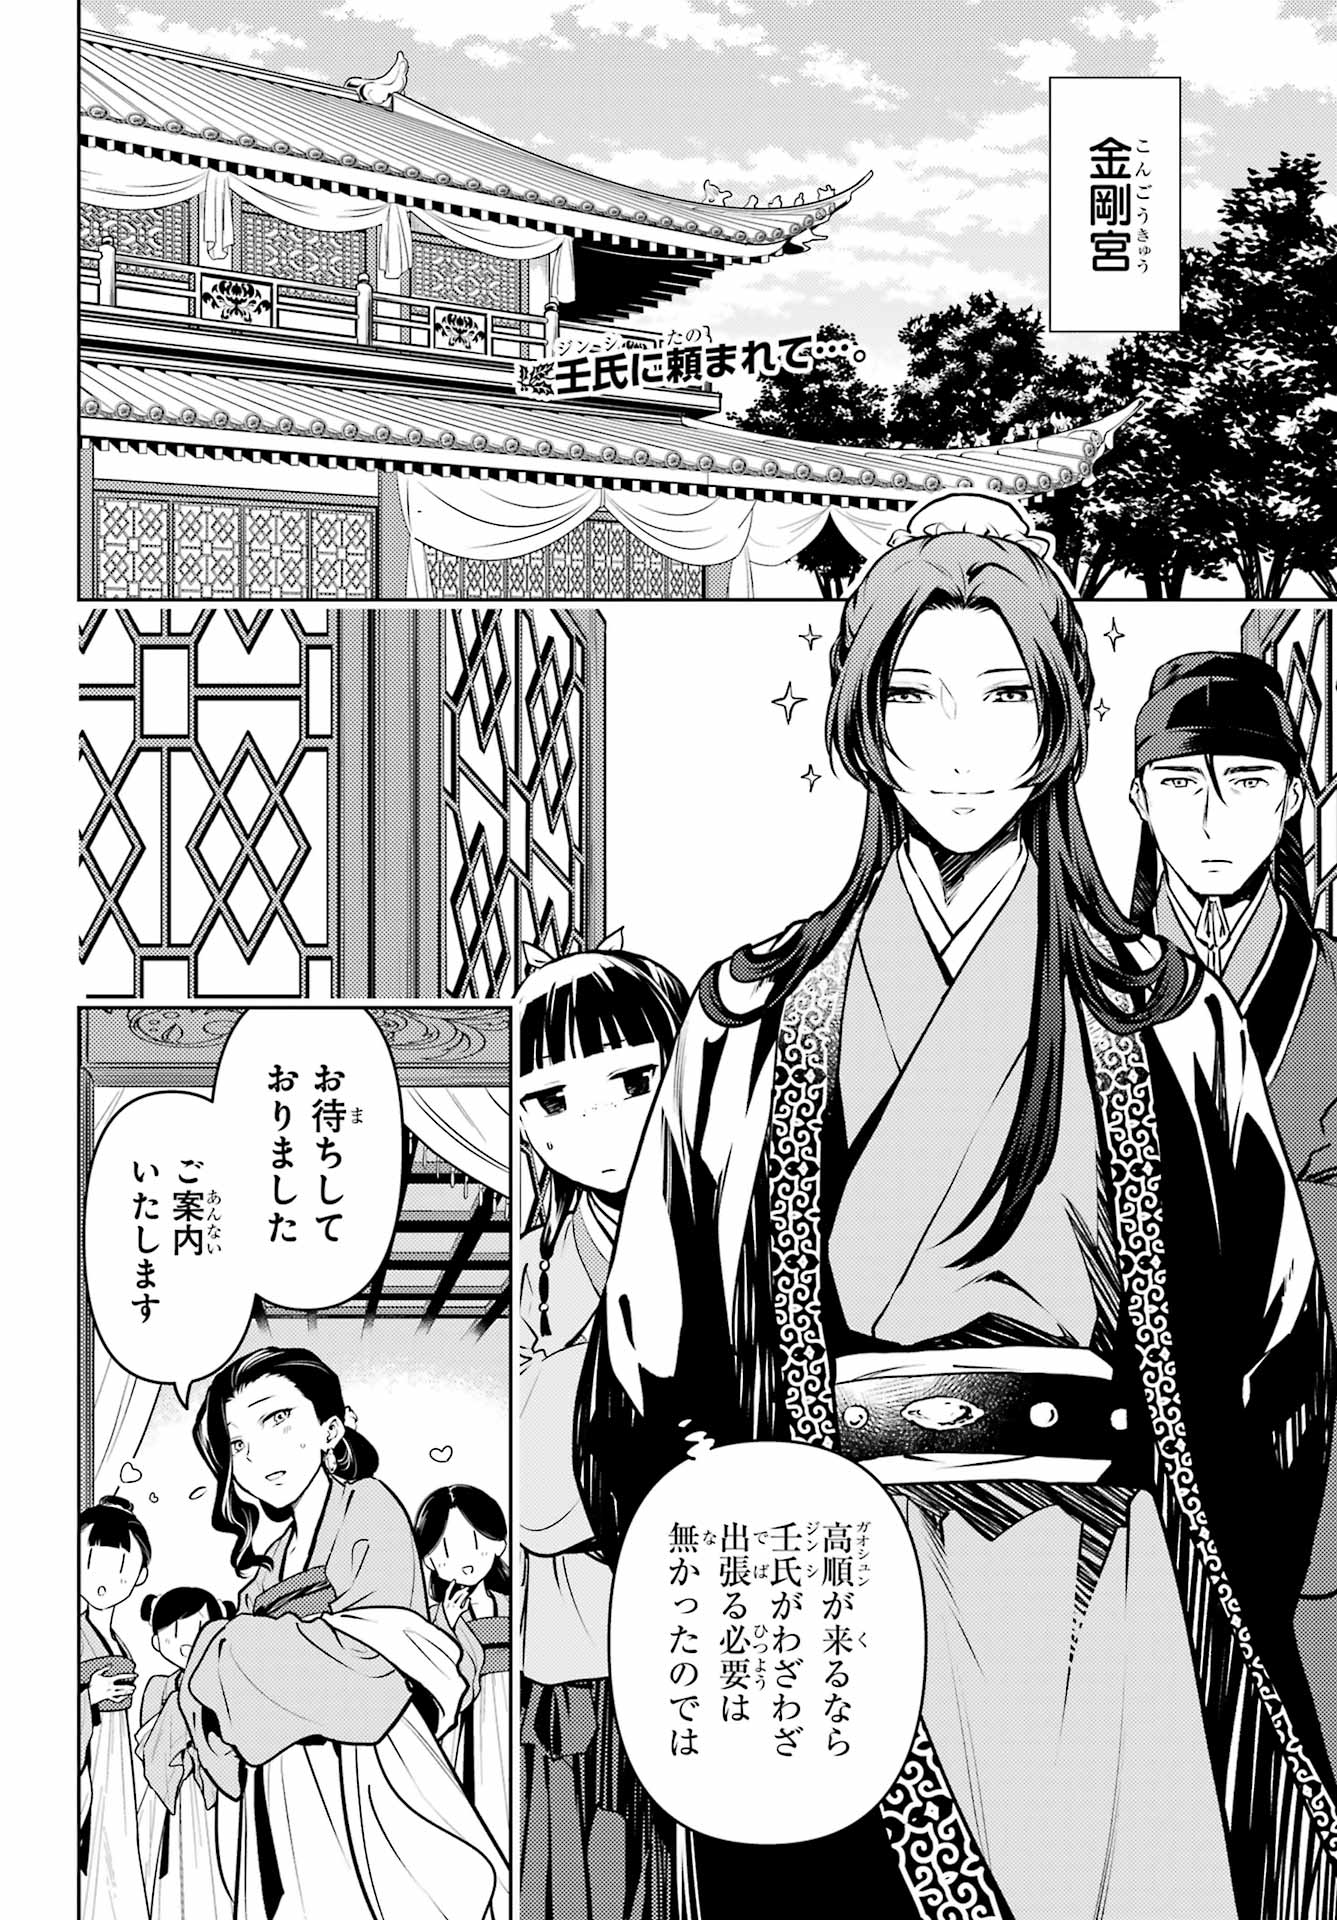 Kusuriya no Hitorigoto - Chapter 67 - Page 2